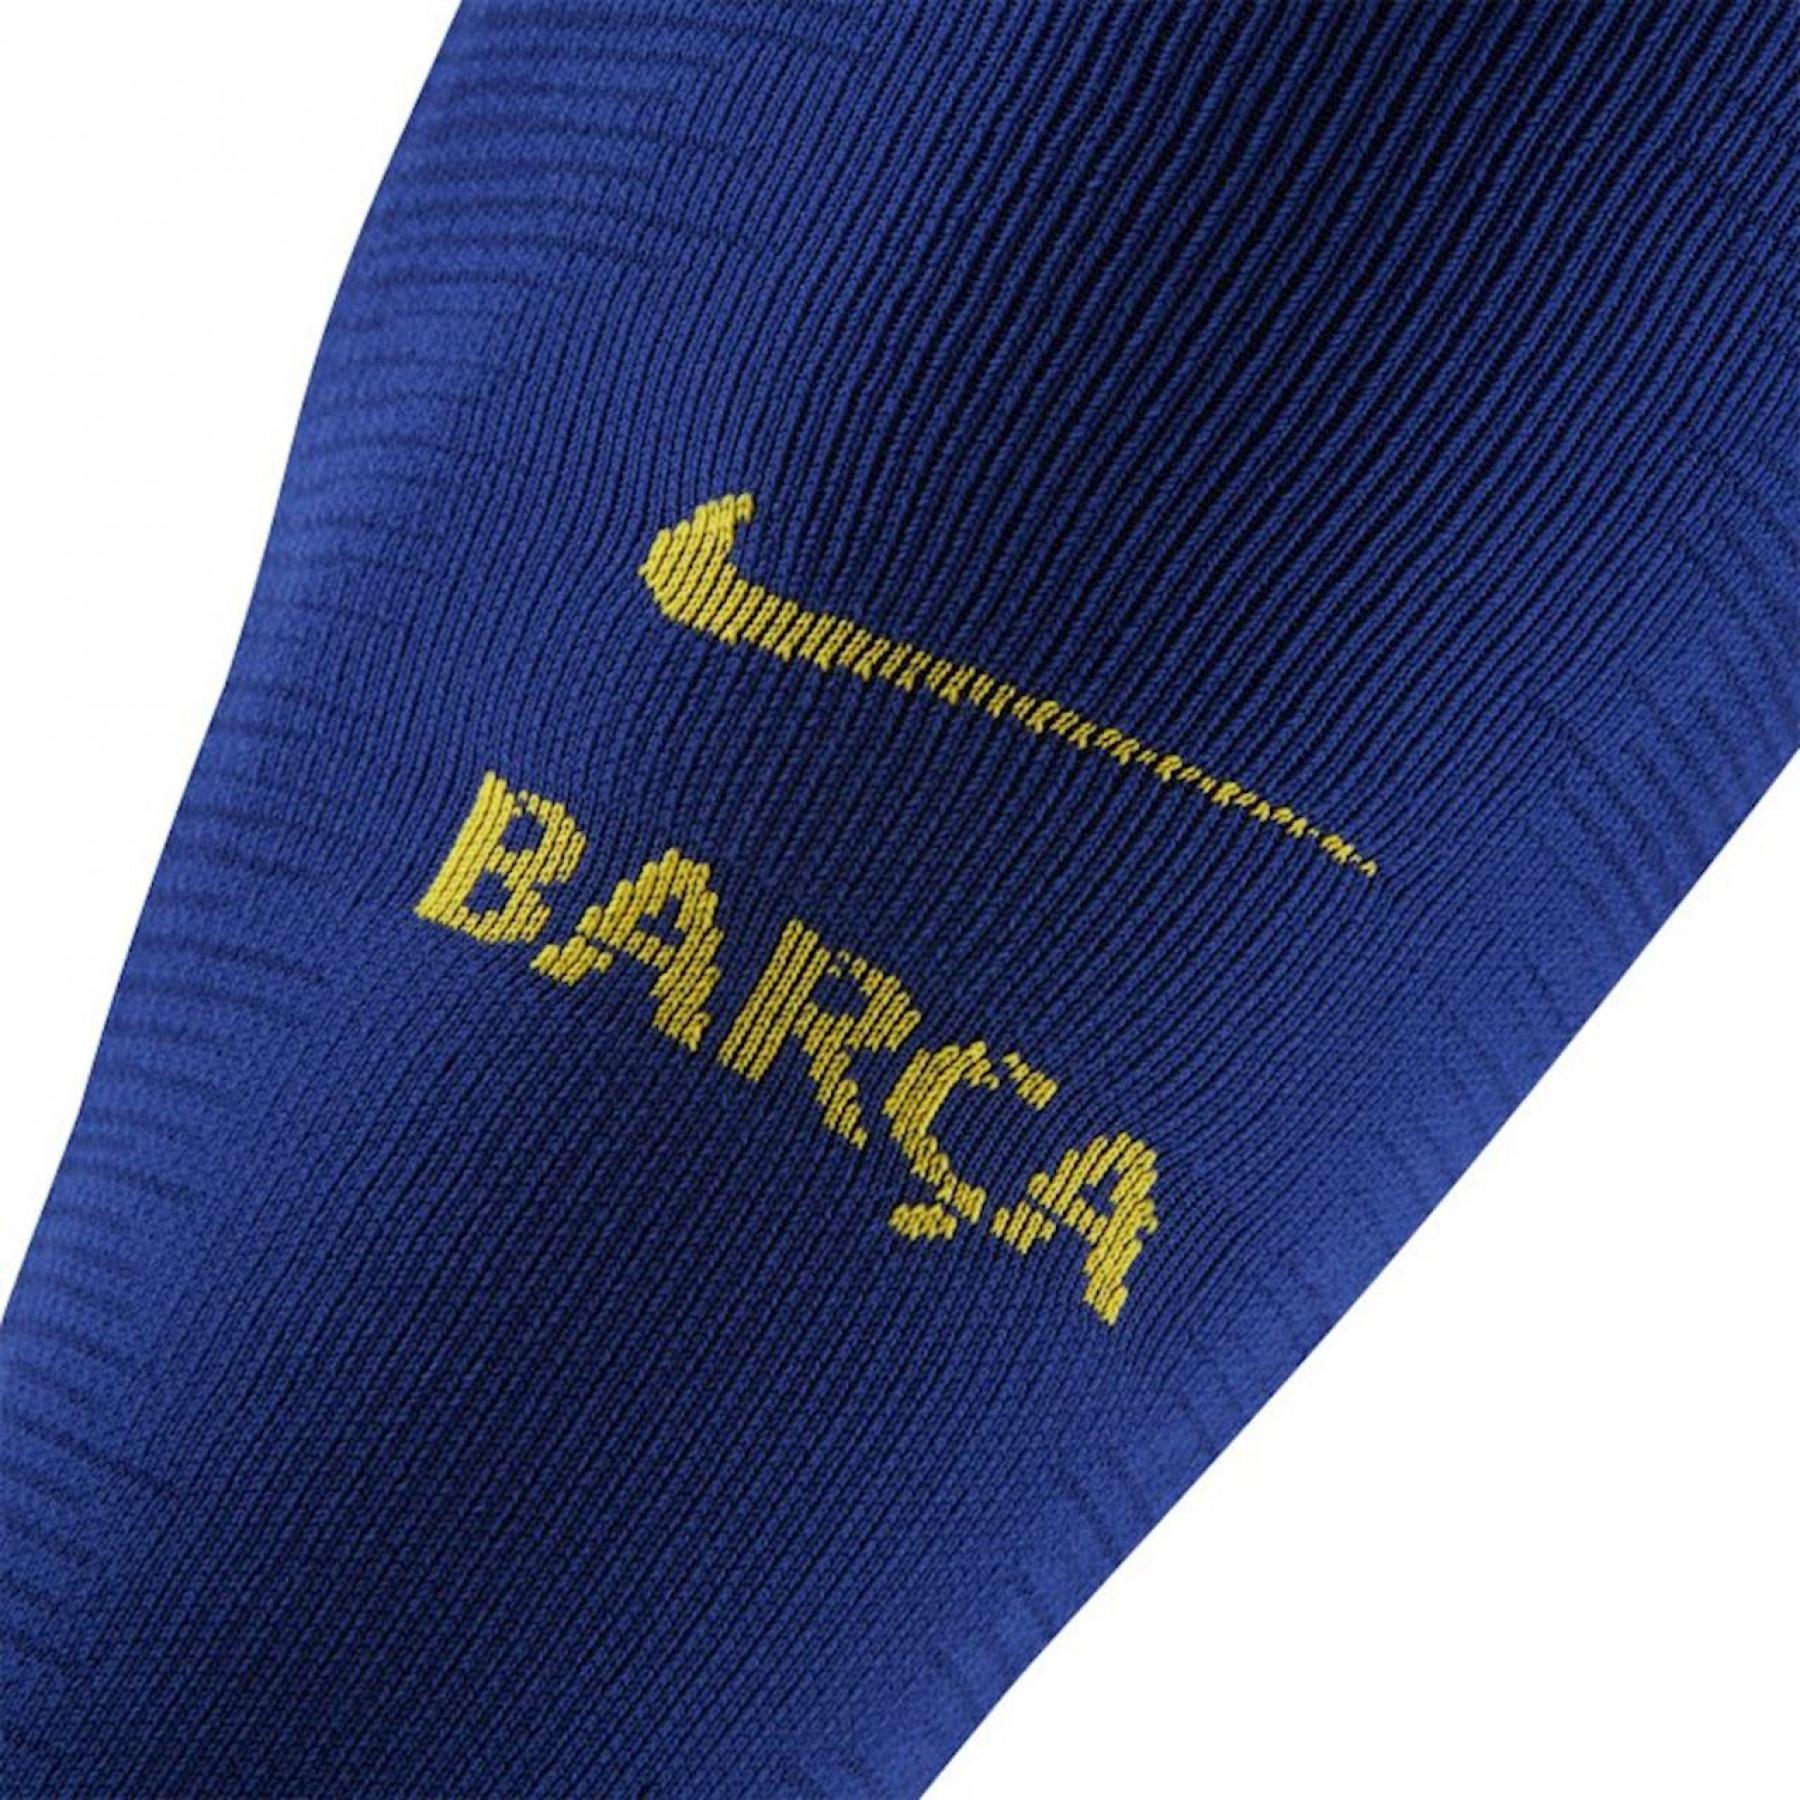 Authentic barcelona socks 2019/20